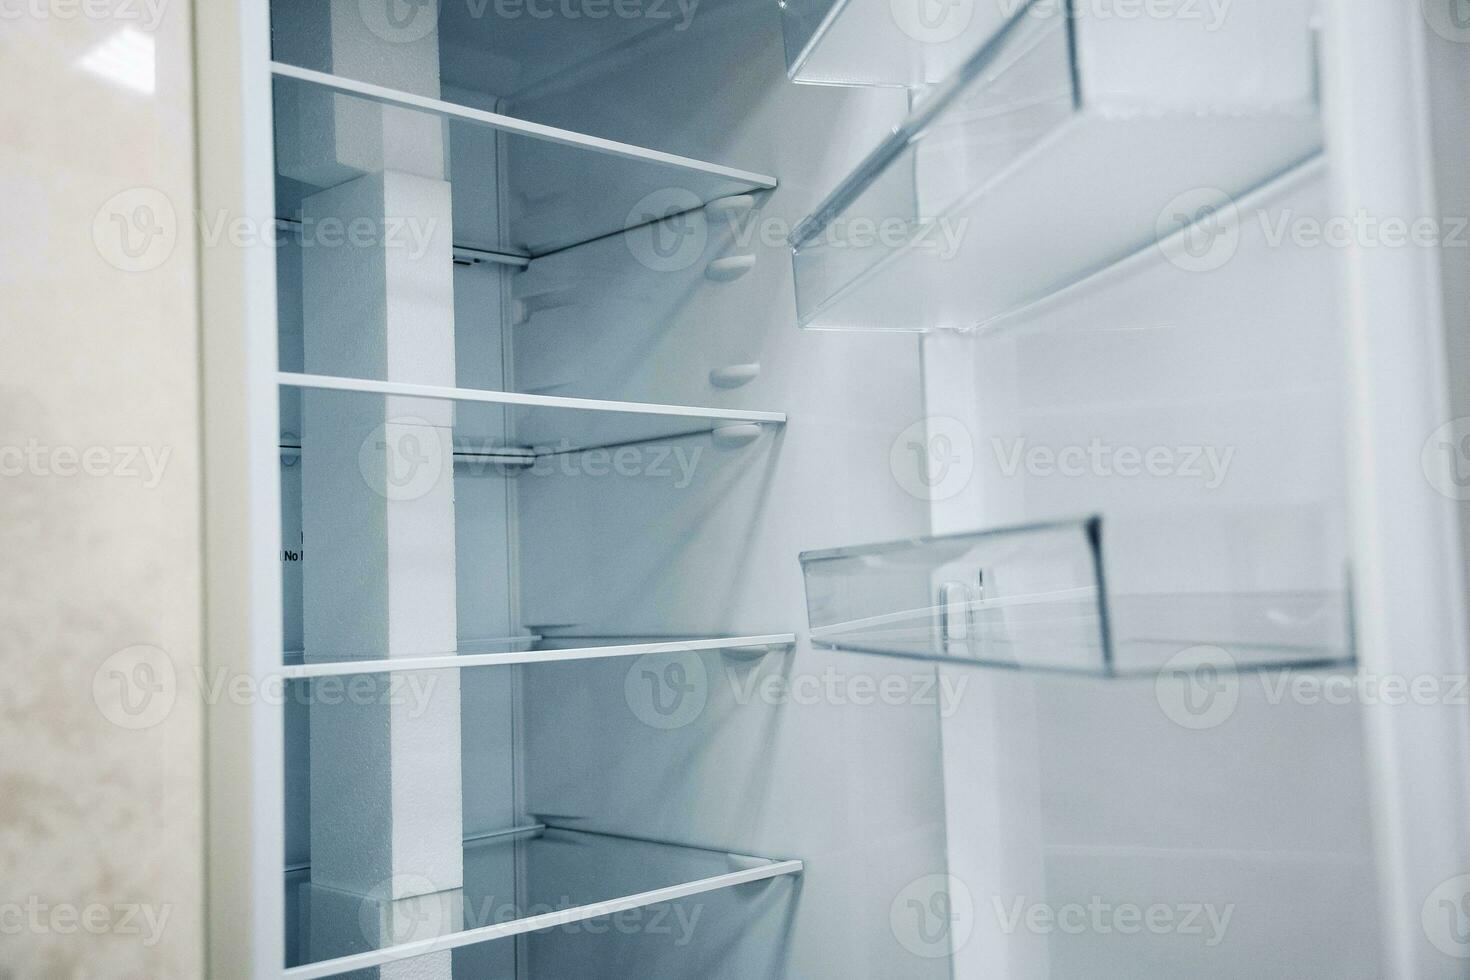 empty shelves of an open refrigerator. a new refrigerator photo